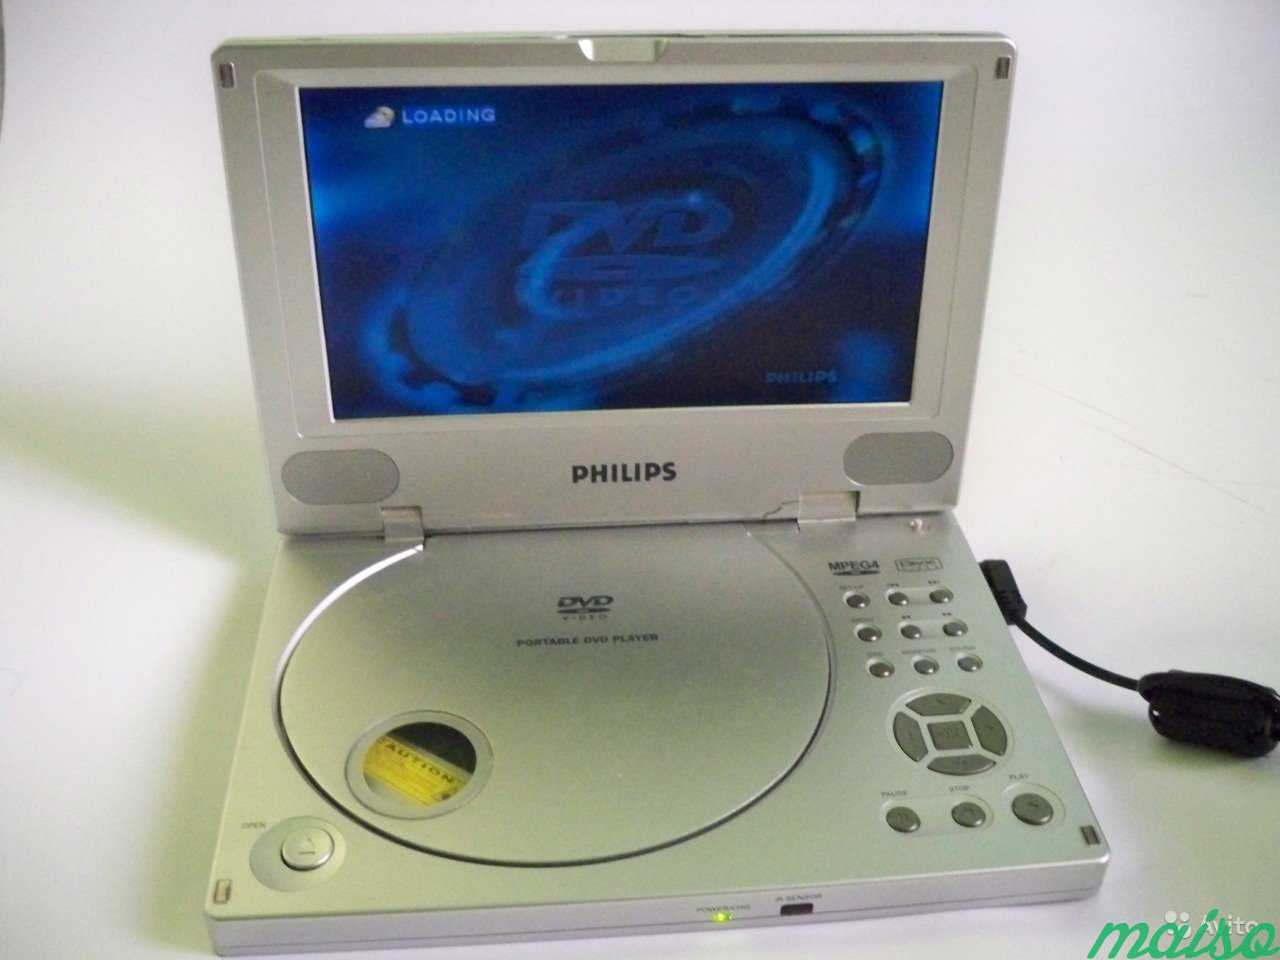 Проигрыватель филипс. DVD-плеер Philips pet810. Philips DVD Player. Портативный двд плеер Филипс. Портативный DVD плеер с экраном Philips.